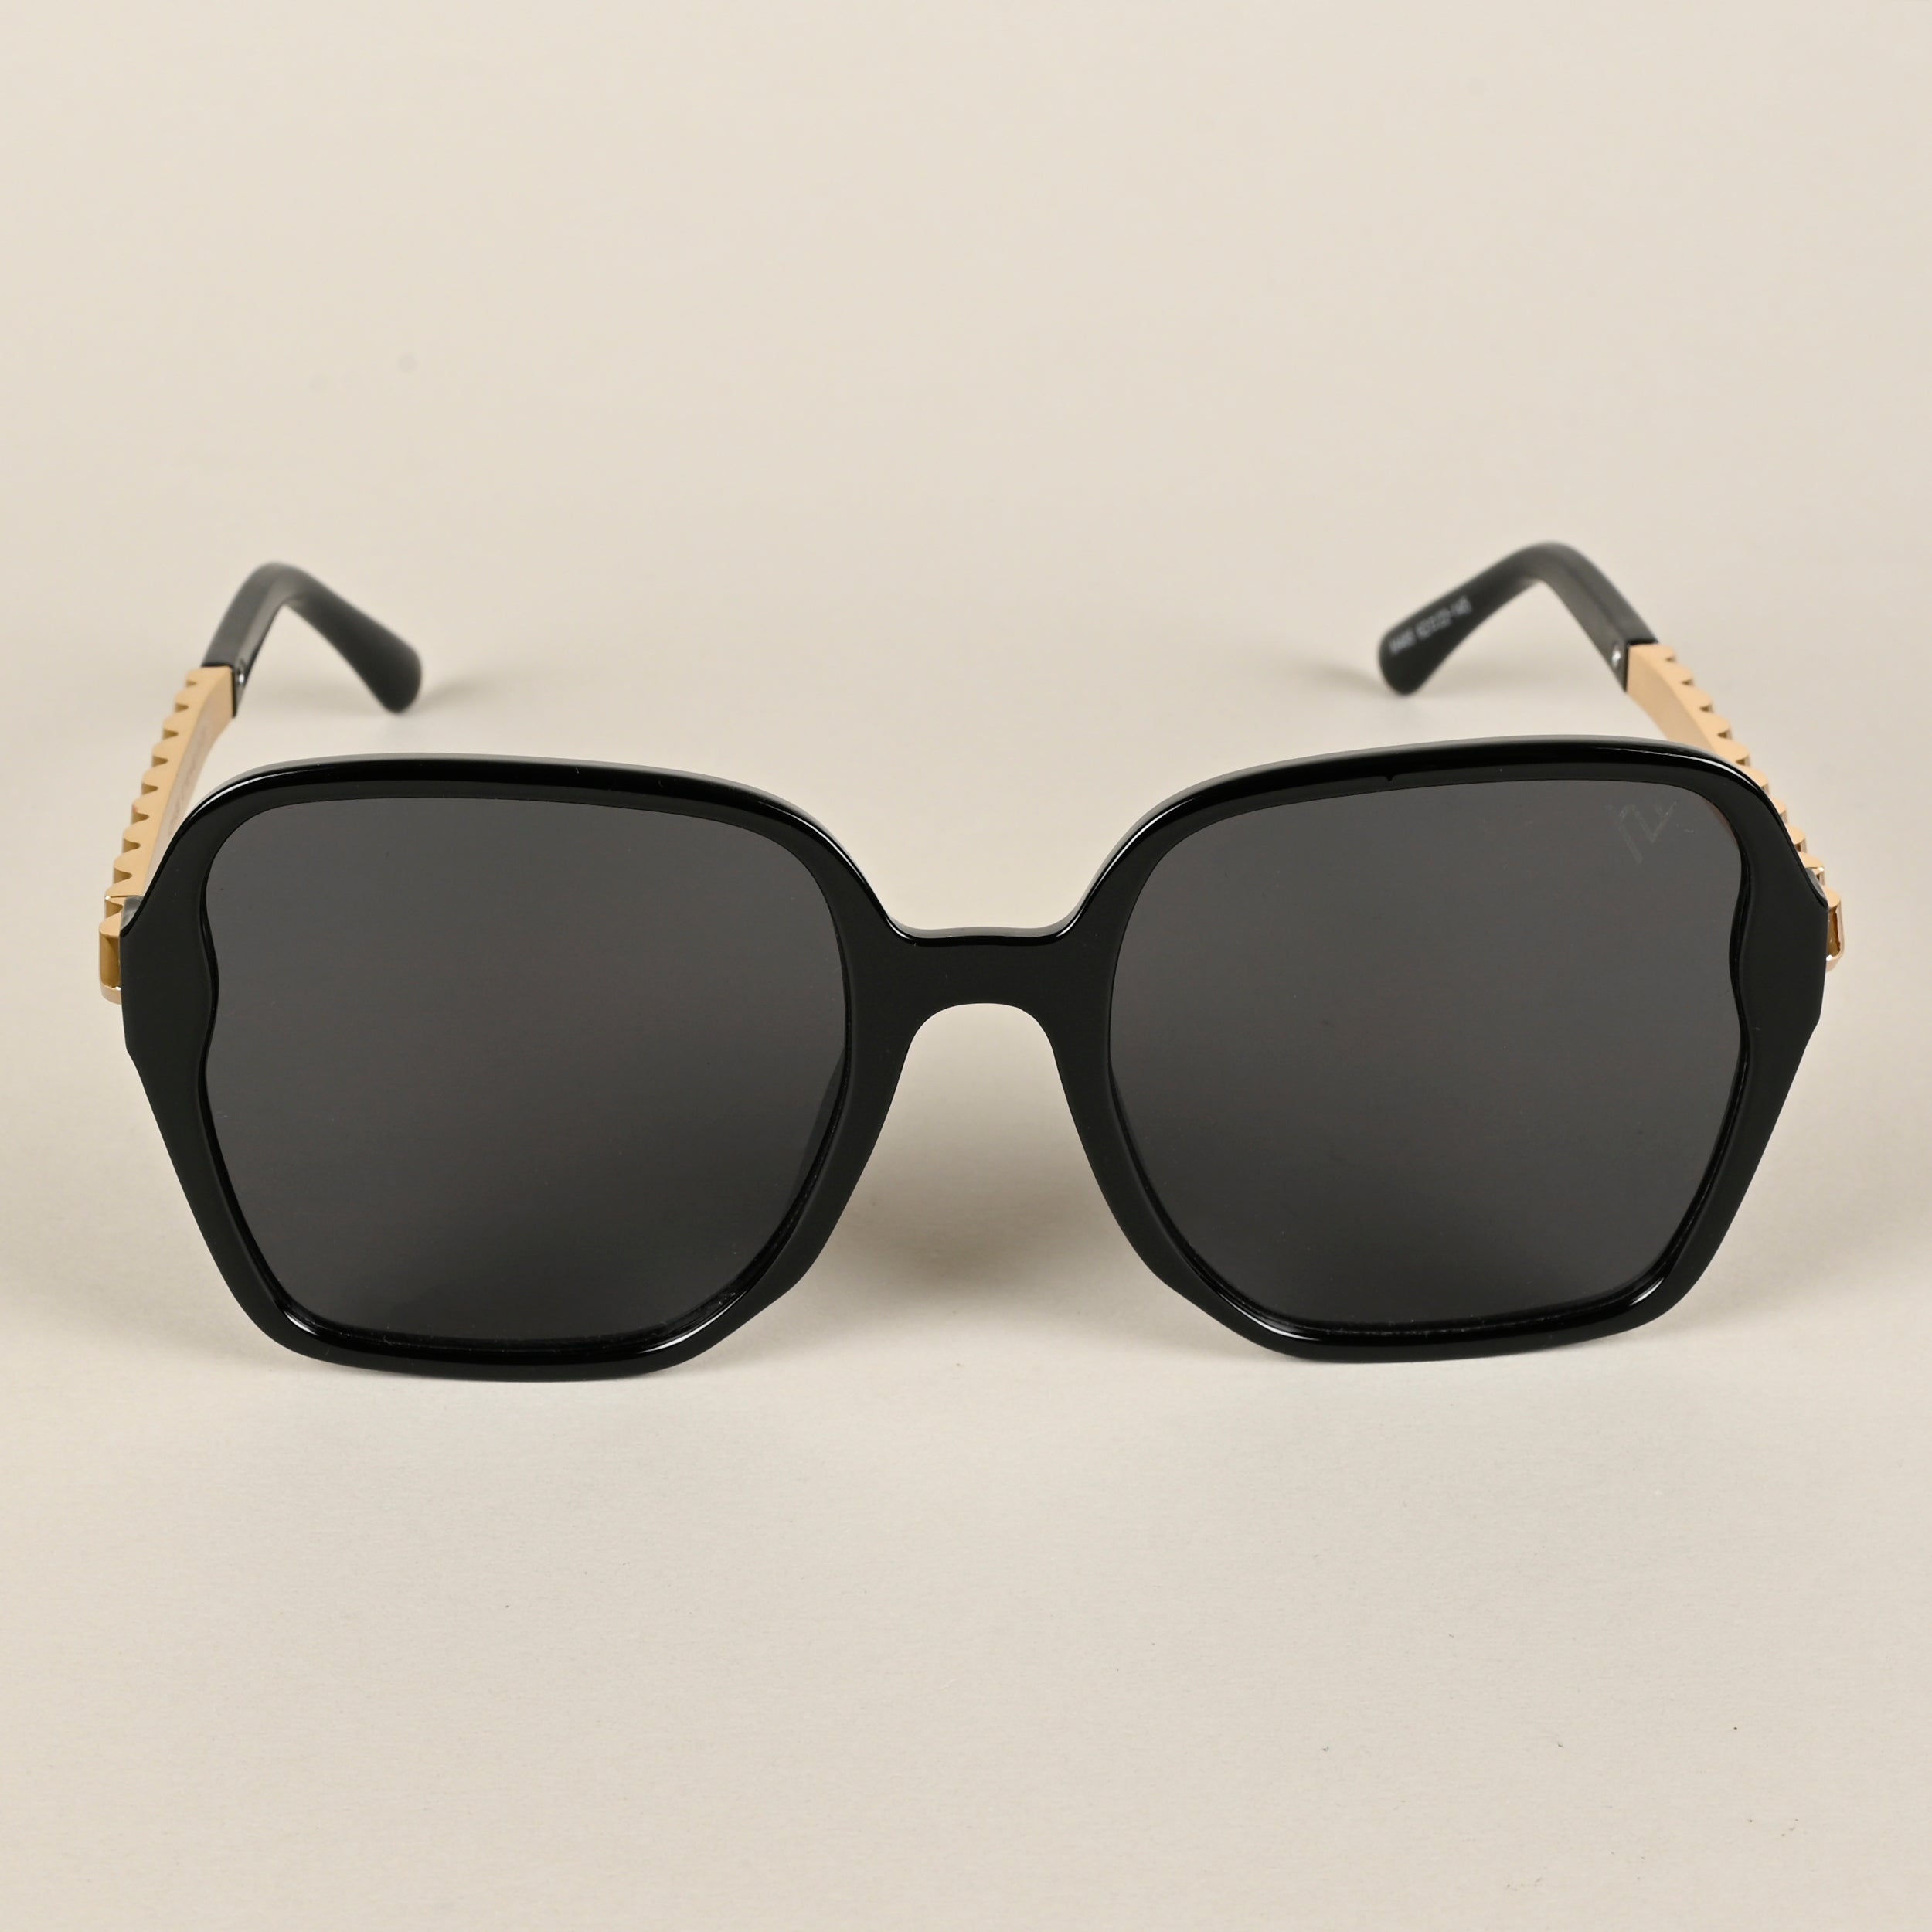 Voyage Black Square Sunglasses for Men & Women - MG4194